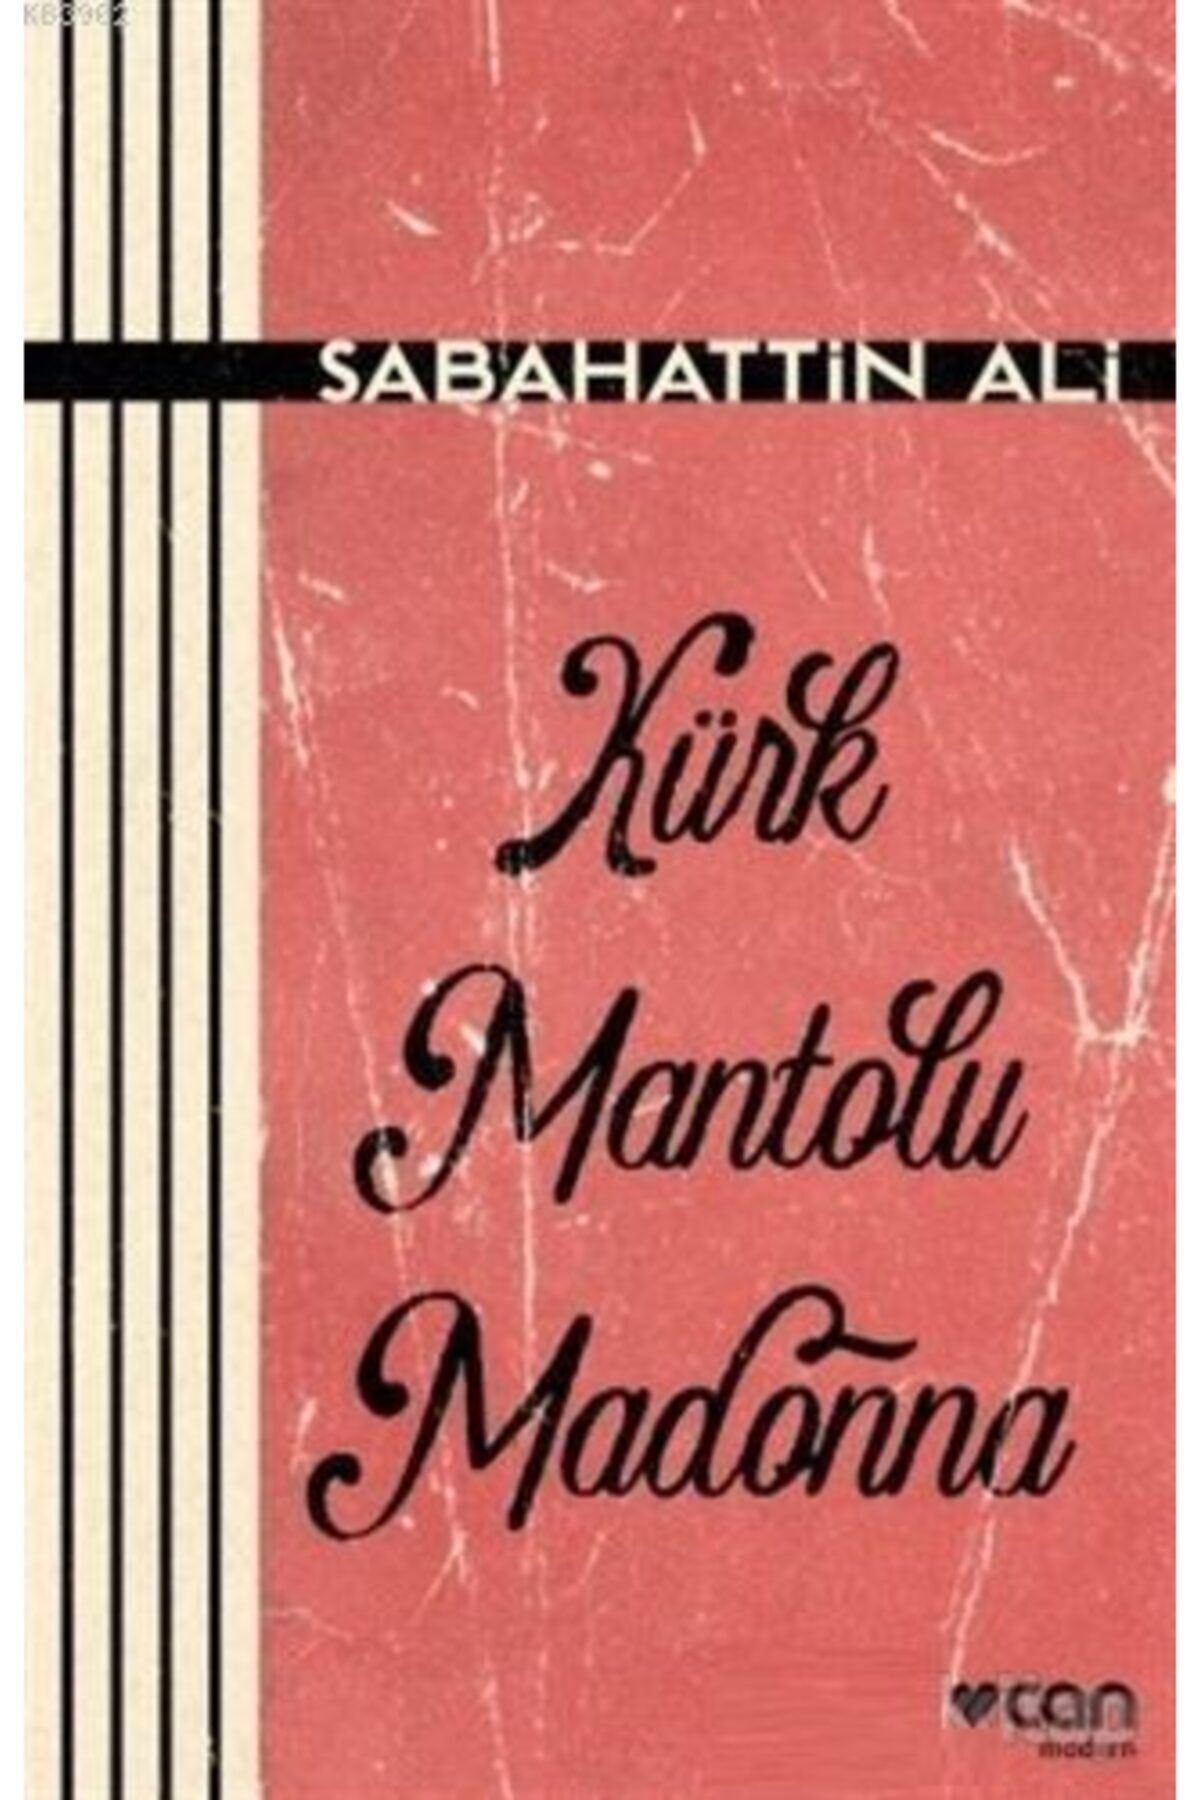 Can Sanat Yayınları Kürk Mantolu Madonna